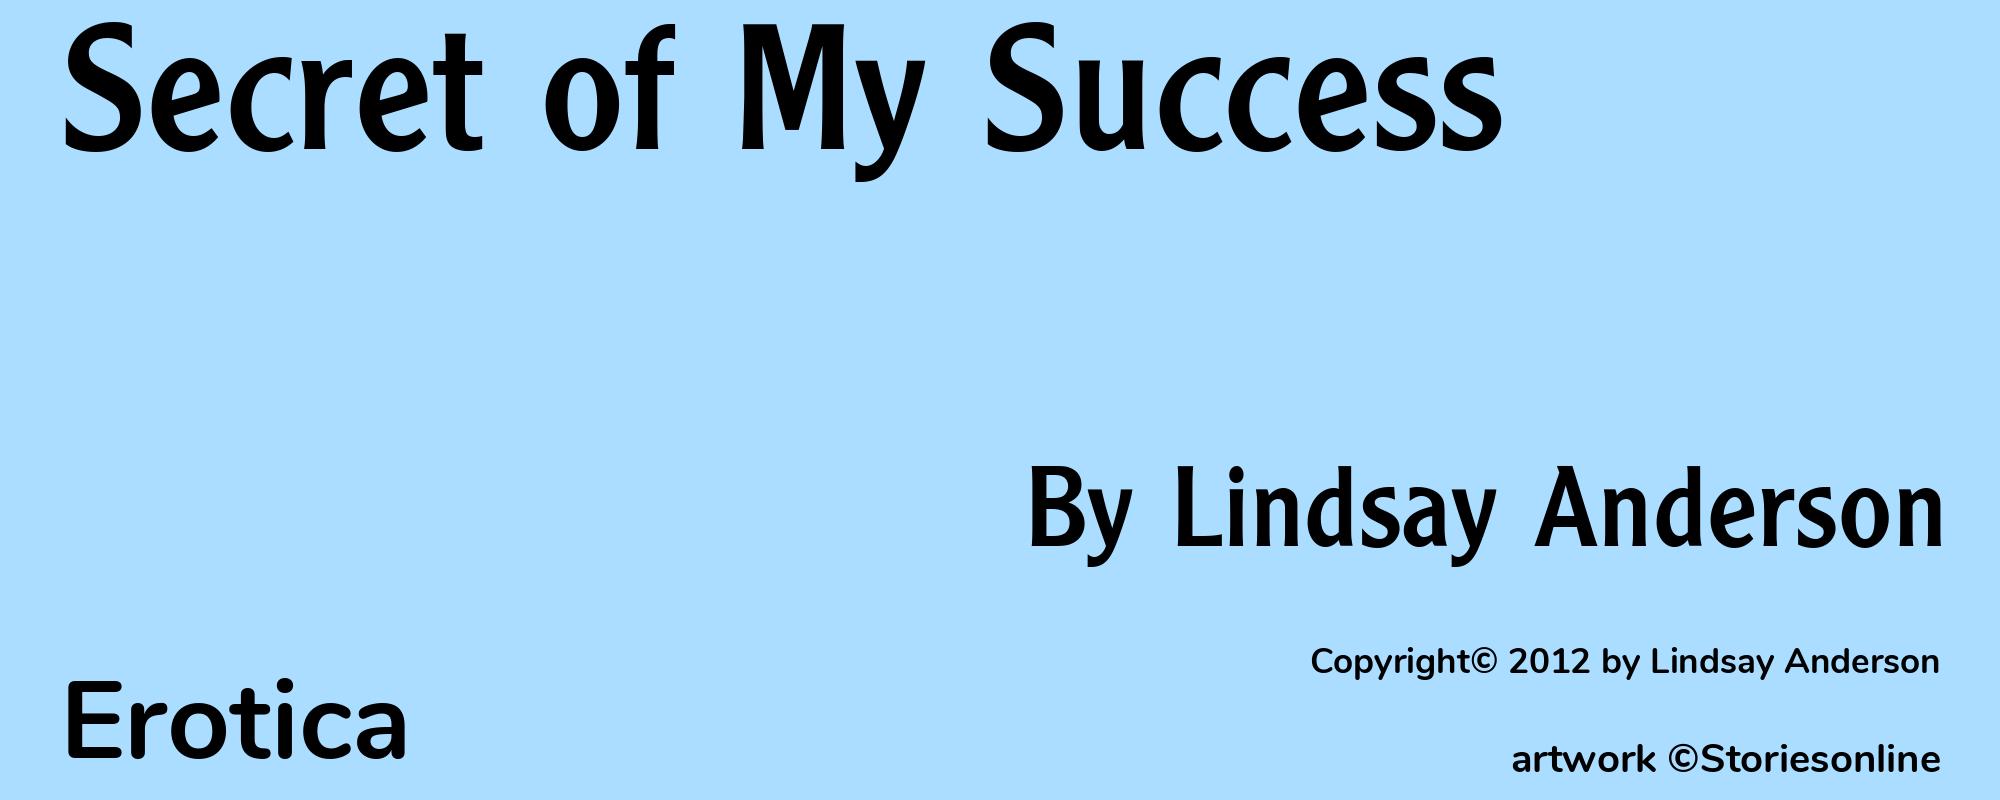 Secret of My Success - Cover